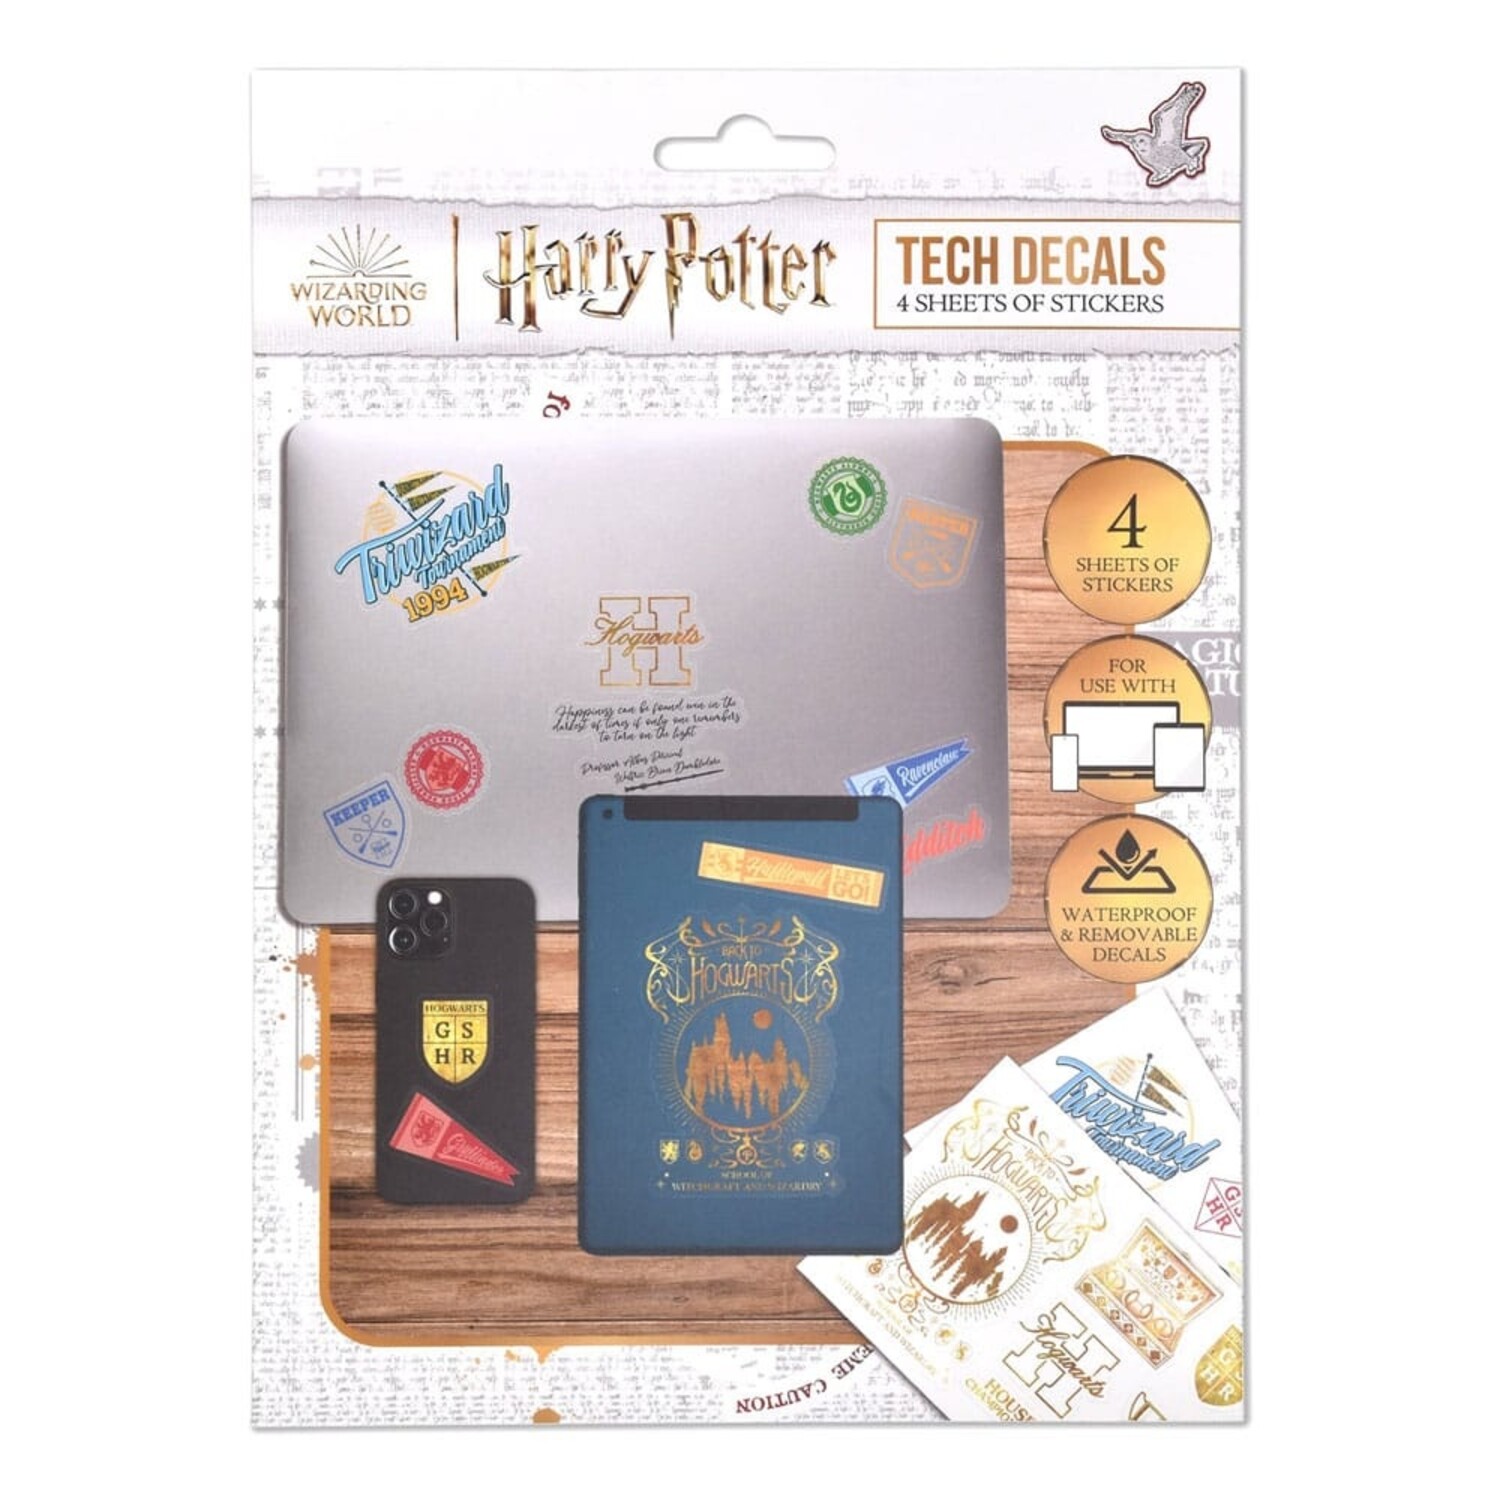 Harry Potter Gadget Decals Symbols Cinereplicas